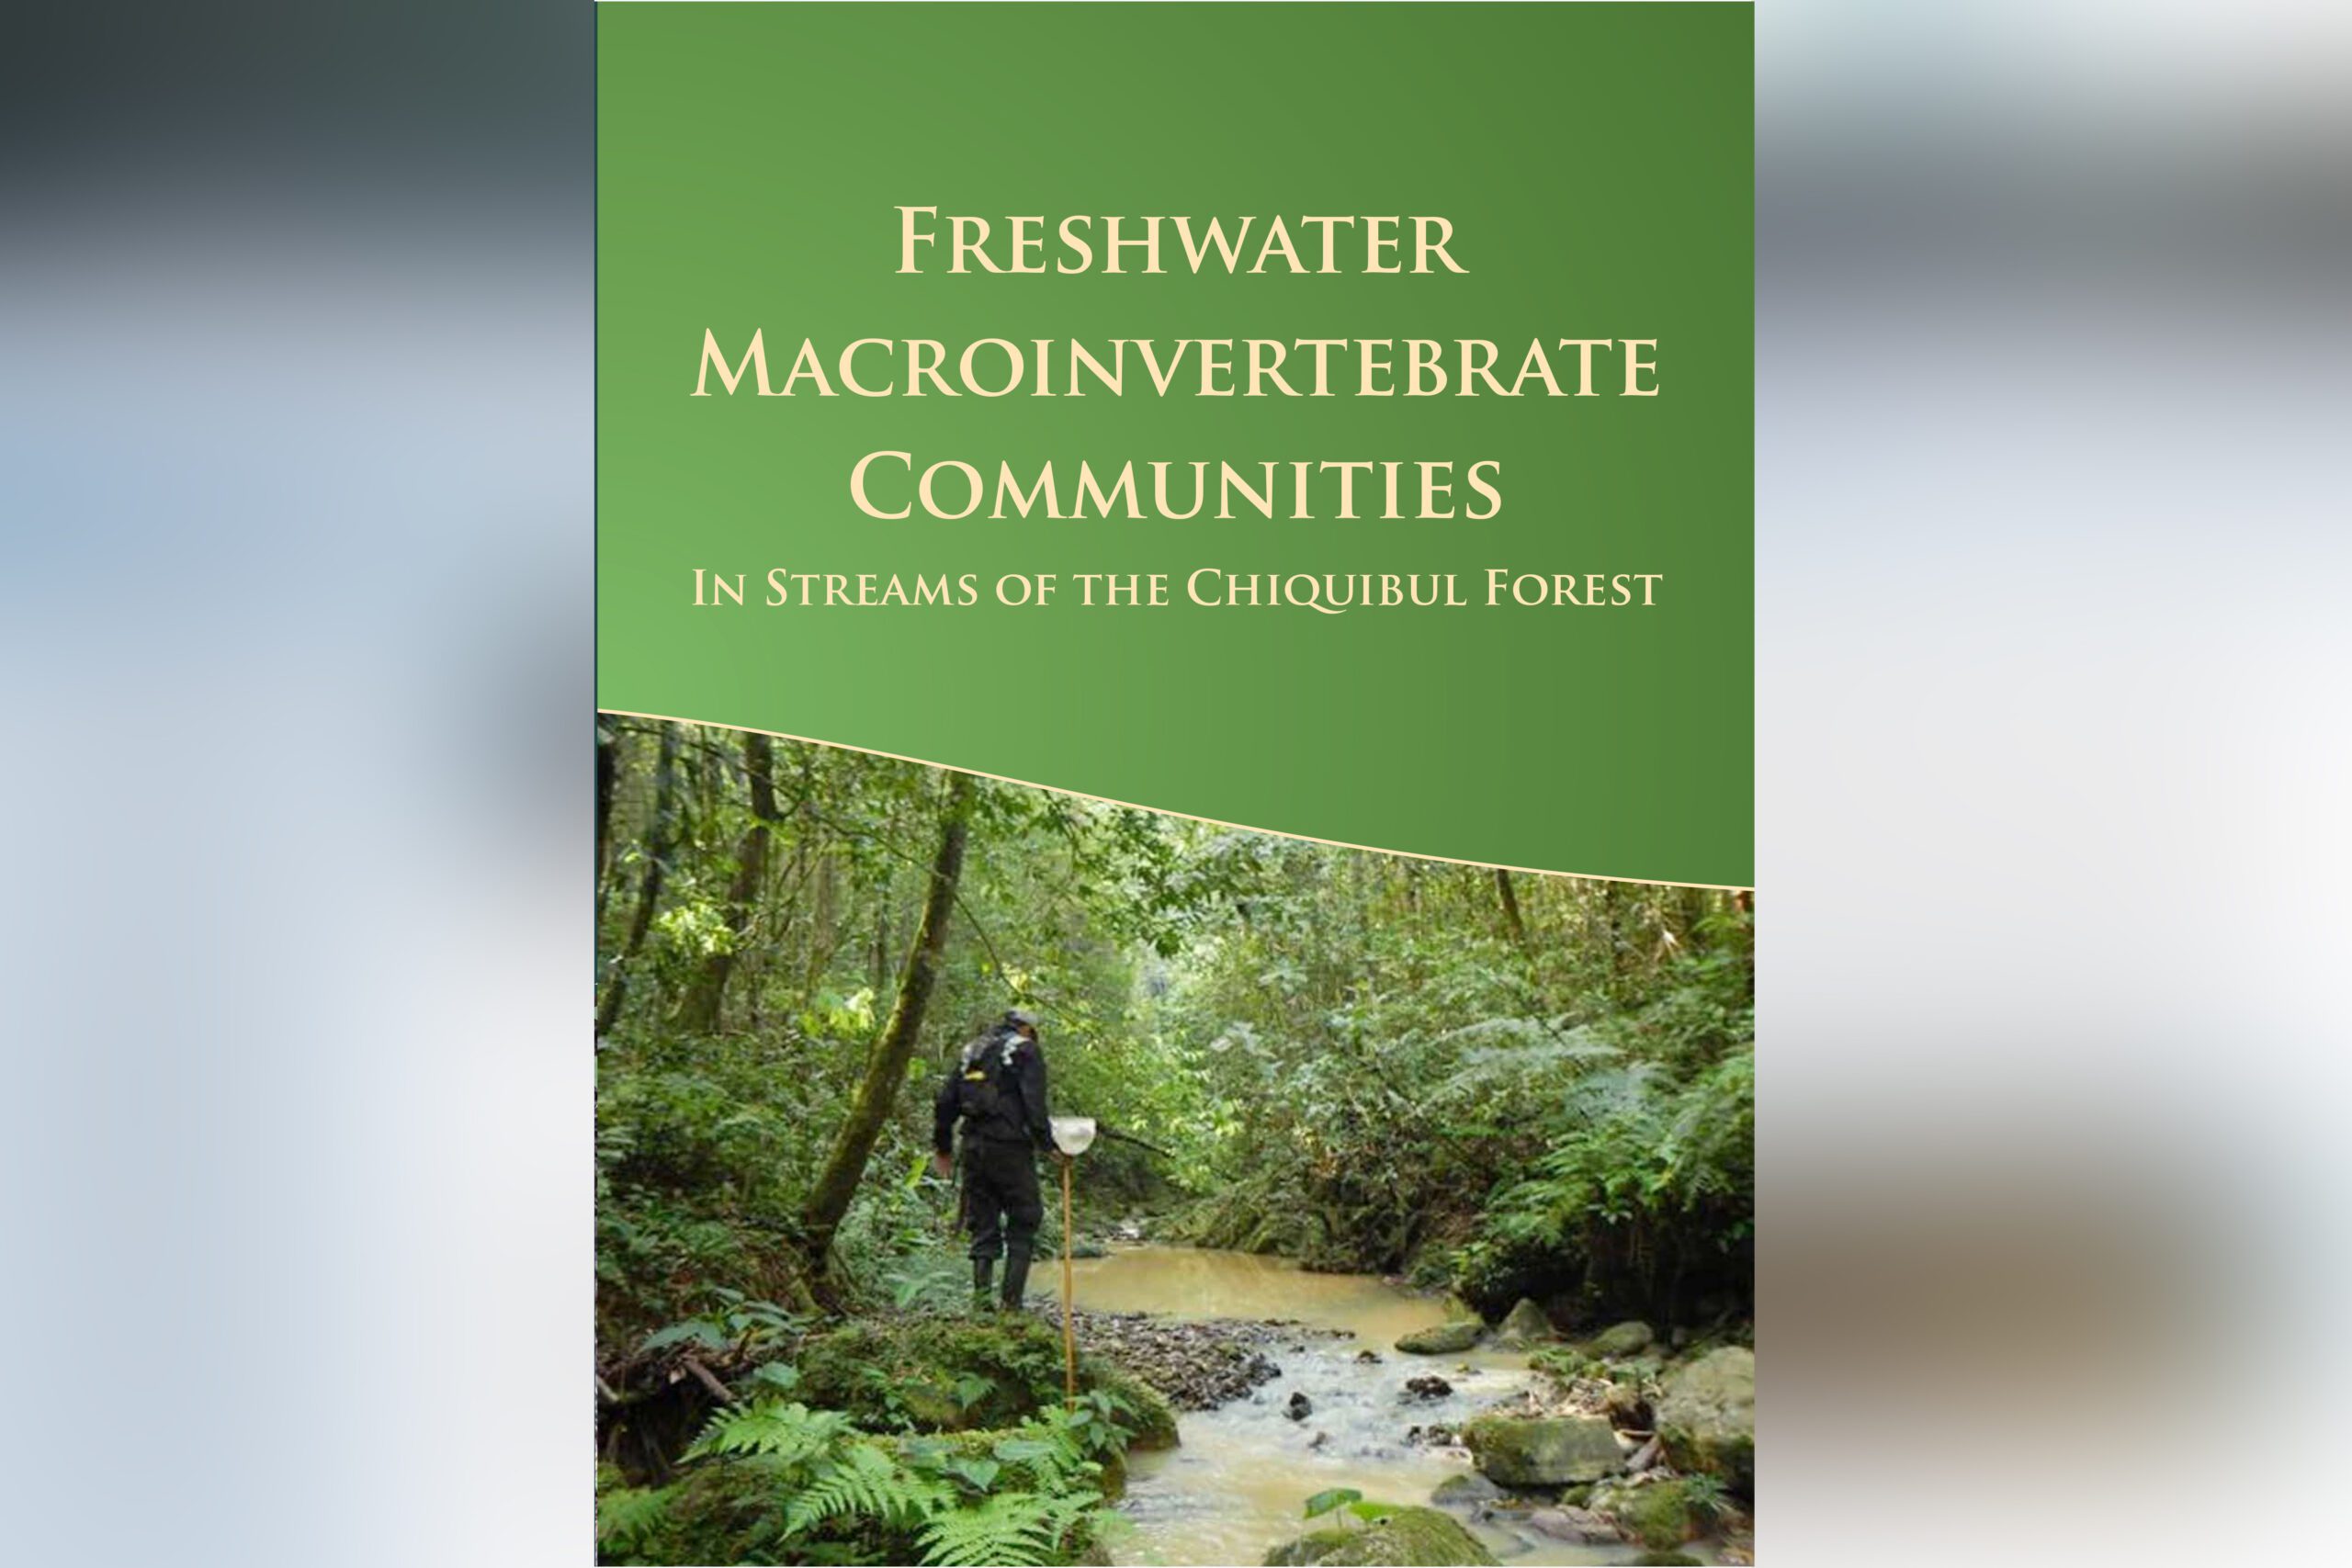 Freshwater Macroinvertebrate Communities